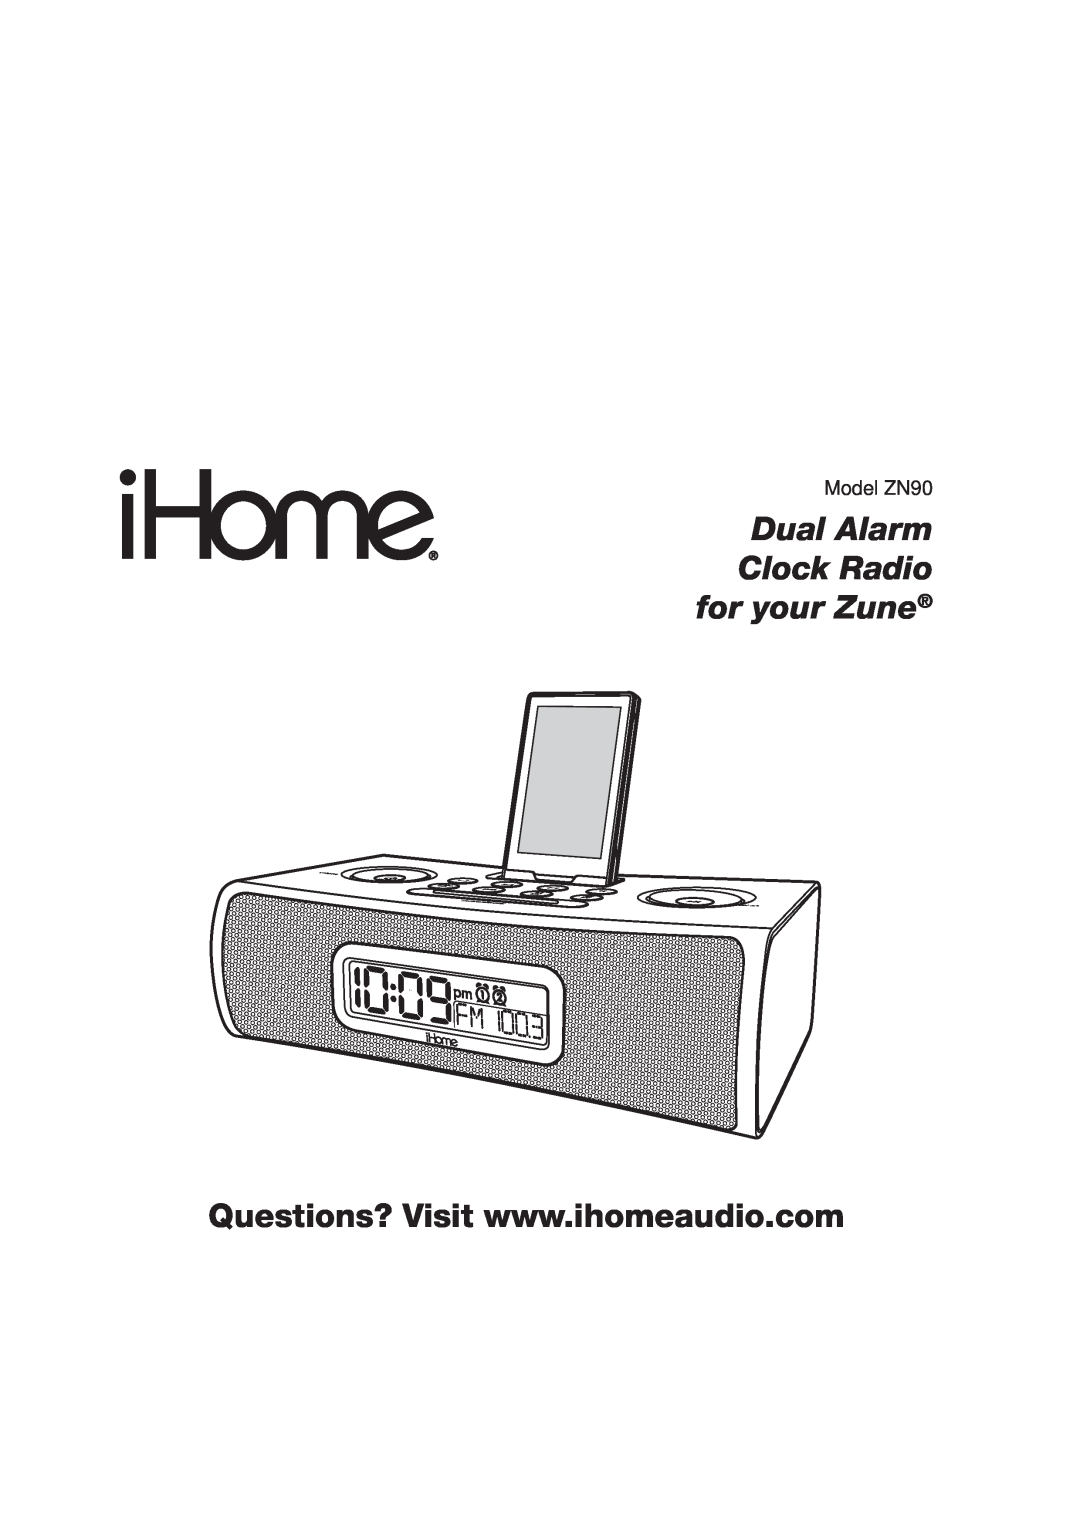 iHome manual Dual Alarm Clock Radio for your Zune, Model ZN90 